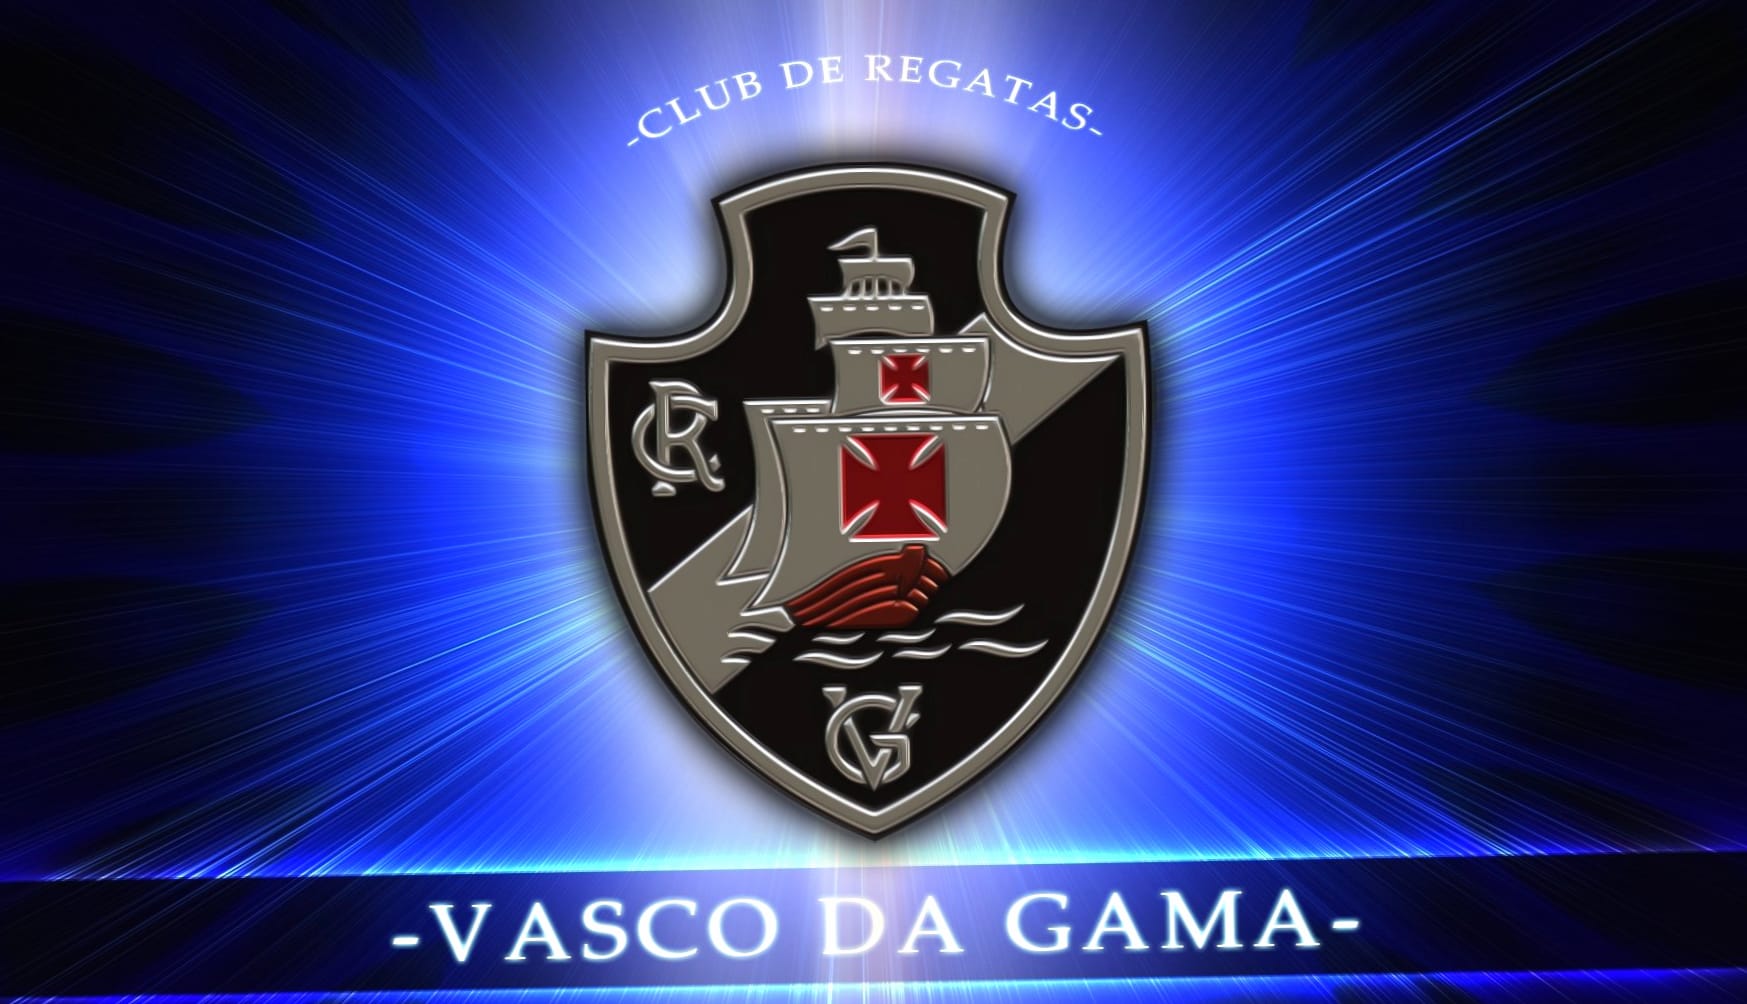 CR Vasco da Gama at 1024 x 768 size wallpapers HD quality